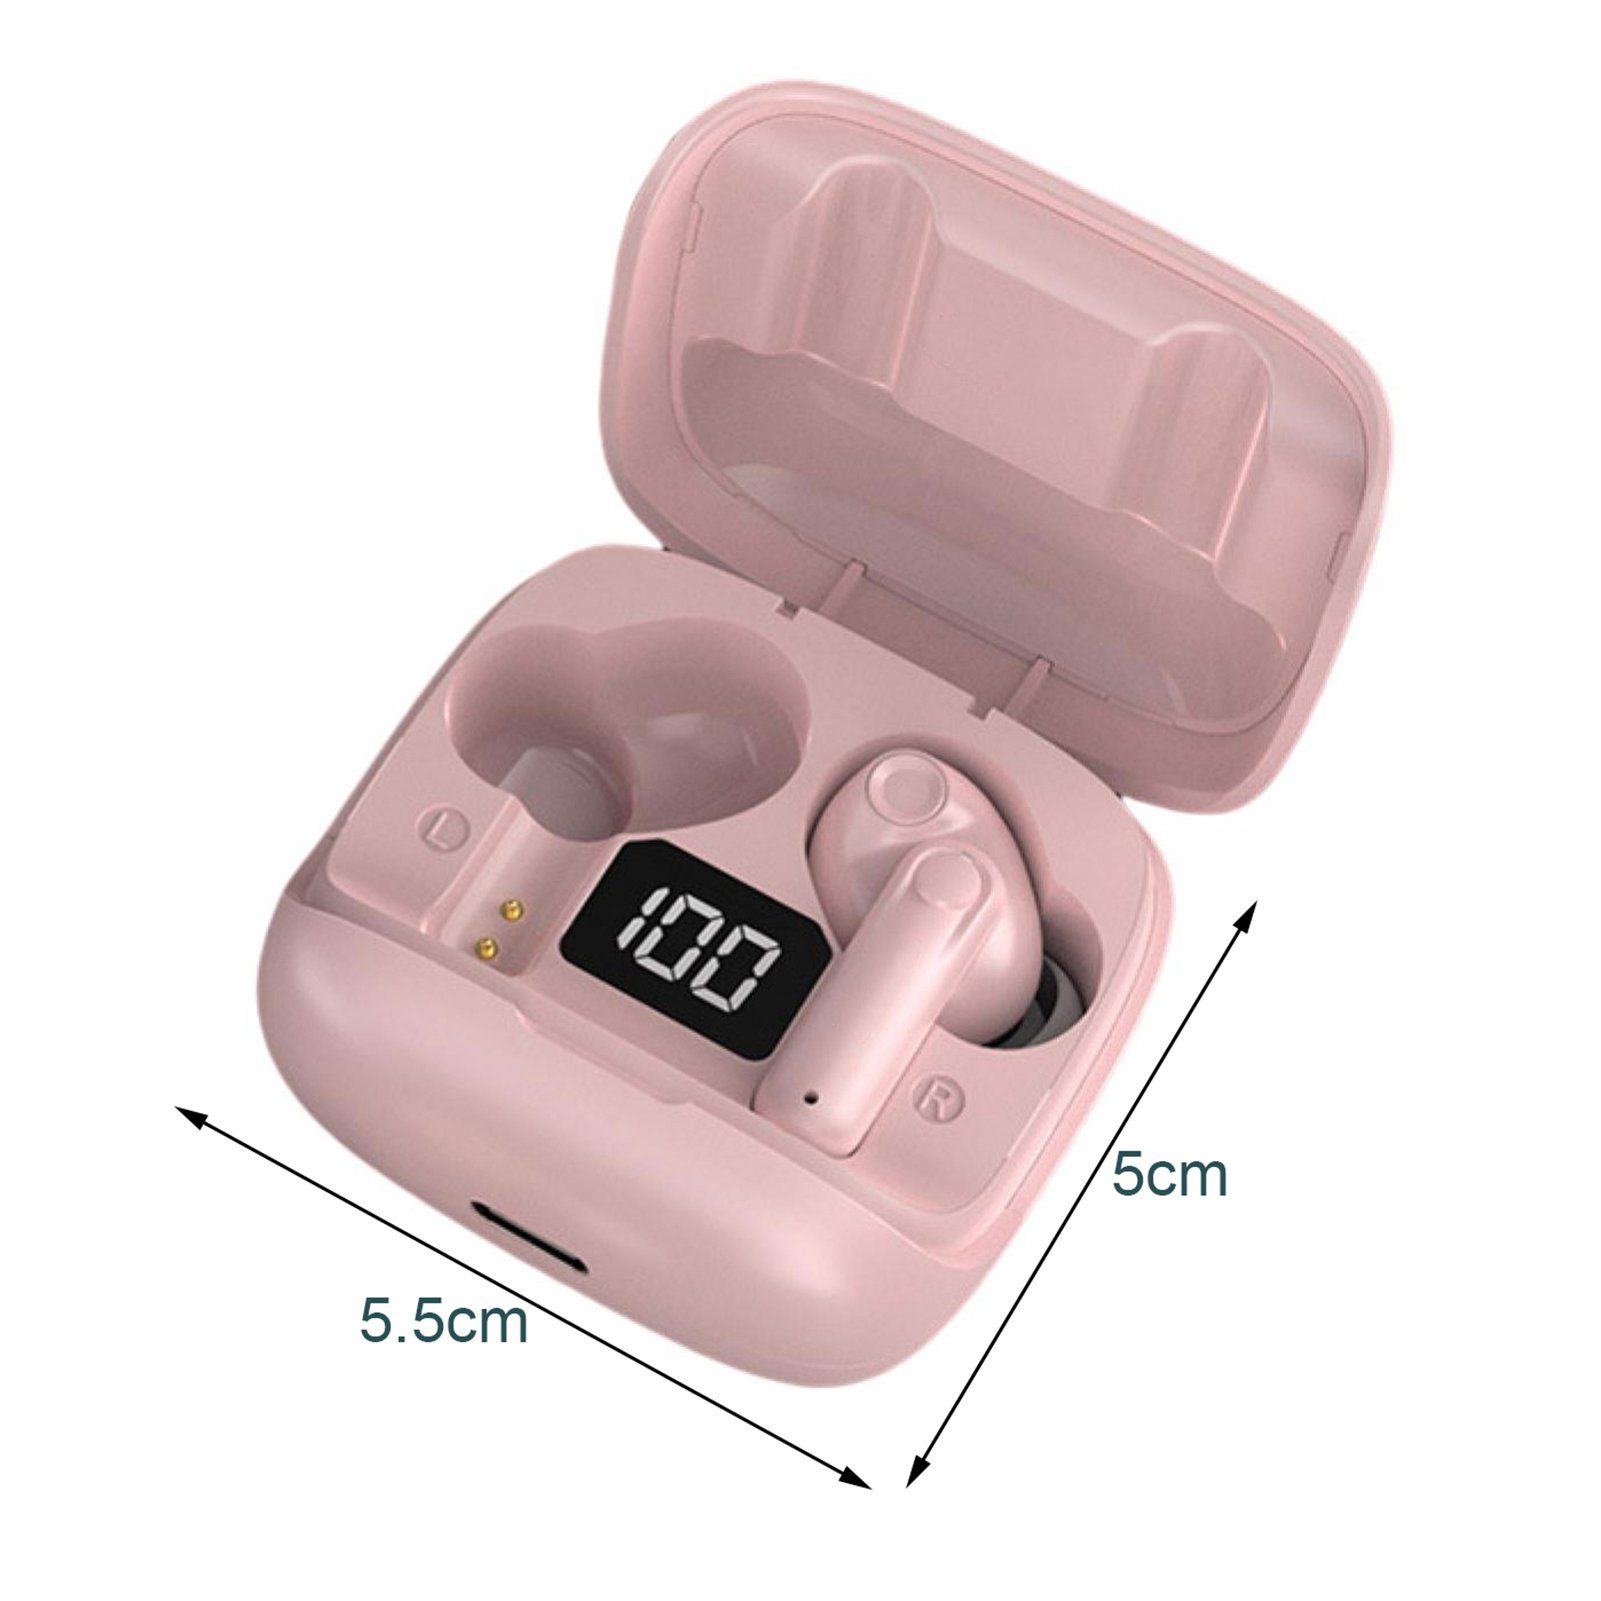 HiFi Schwarz In 5.2 Bluetooth (Bluetooth) Rutaqian von Kopfhörer HiFi-Kopfhörer Sound Ear, Adaptive